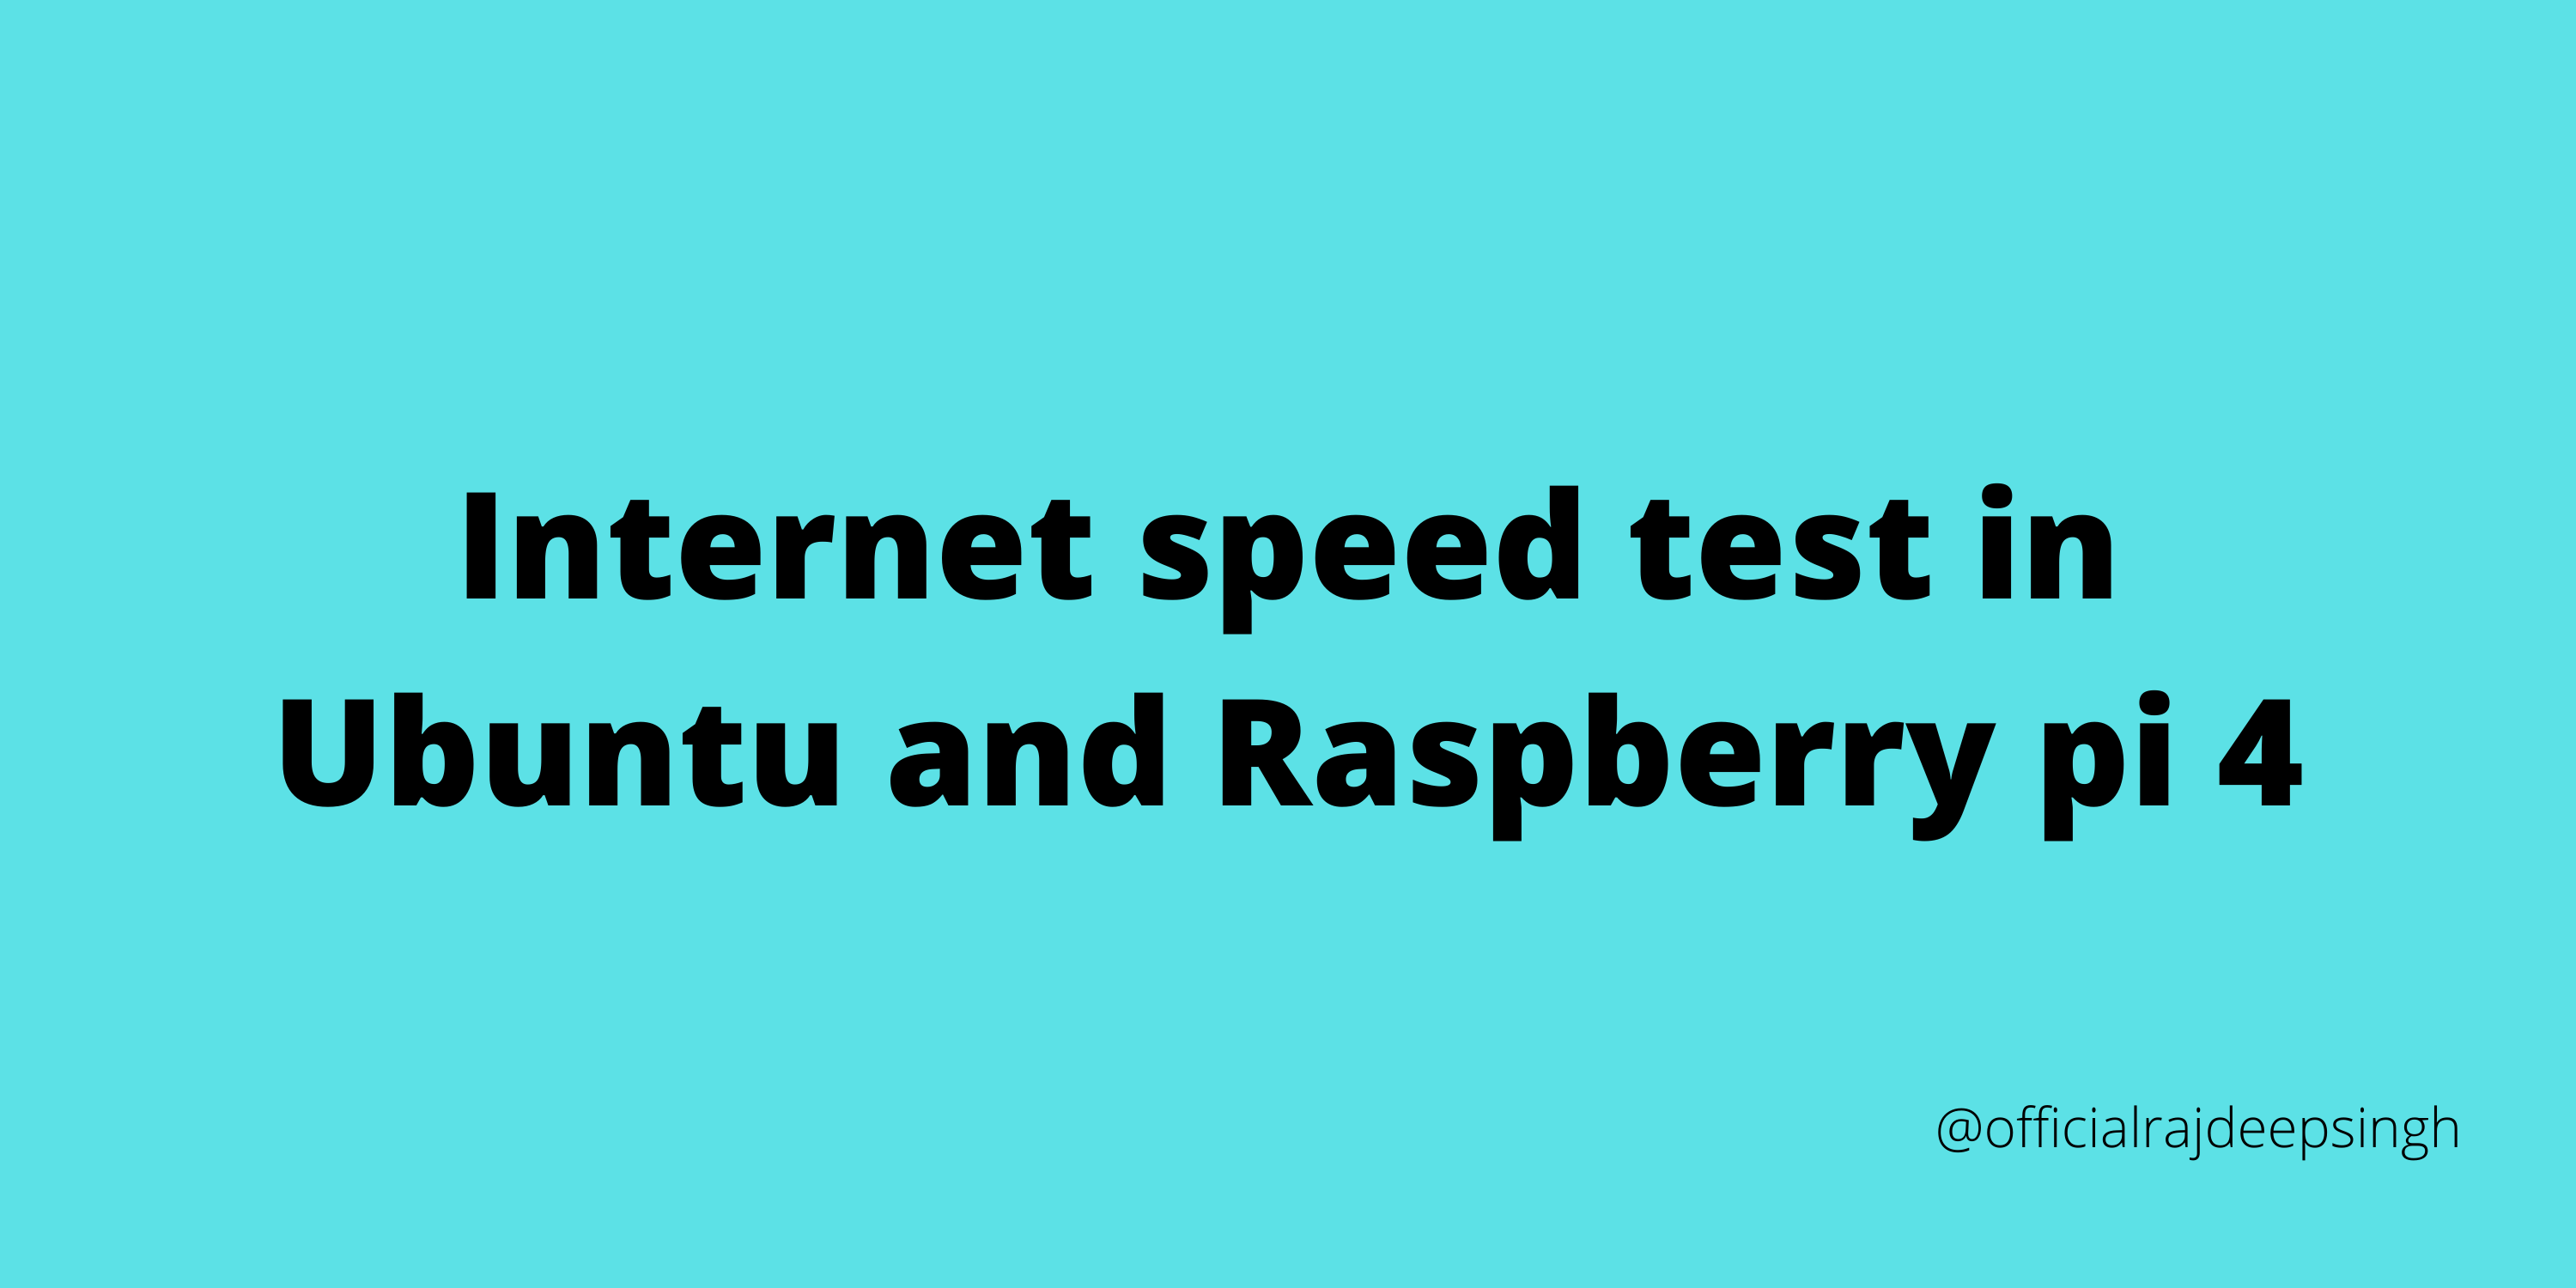 Test internet speed in ubuntu and raspberry pi 4 with CLI tool